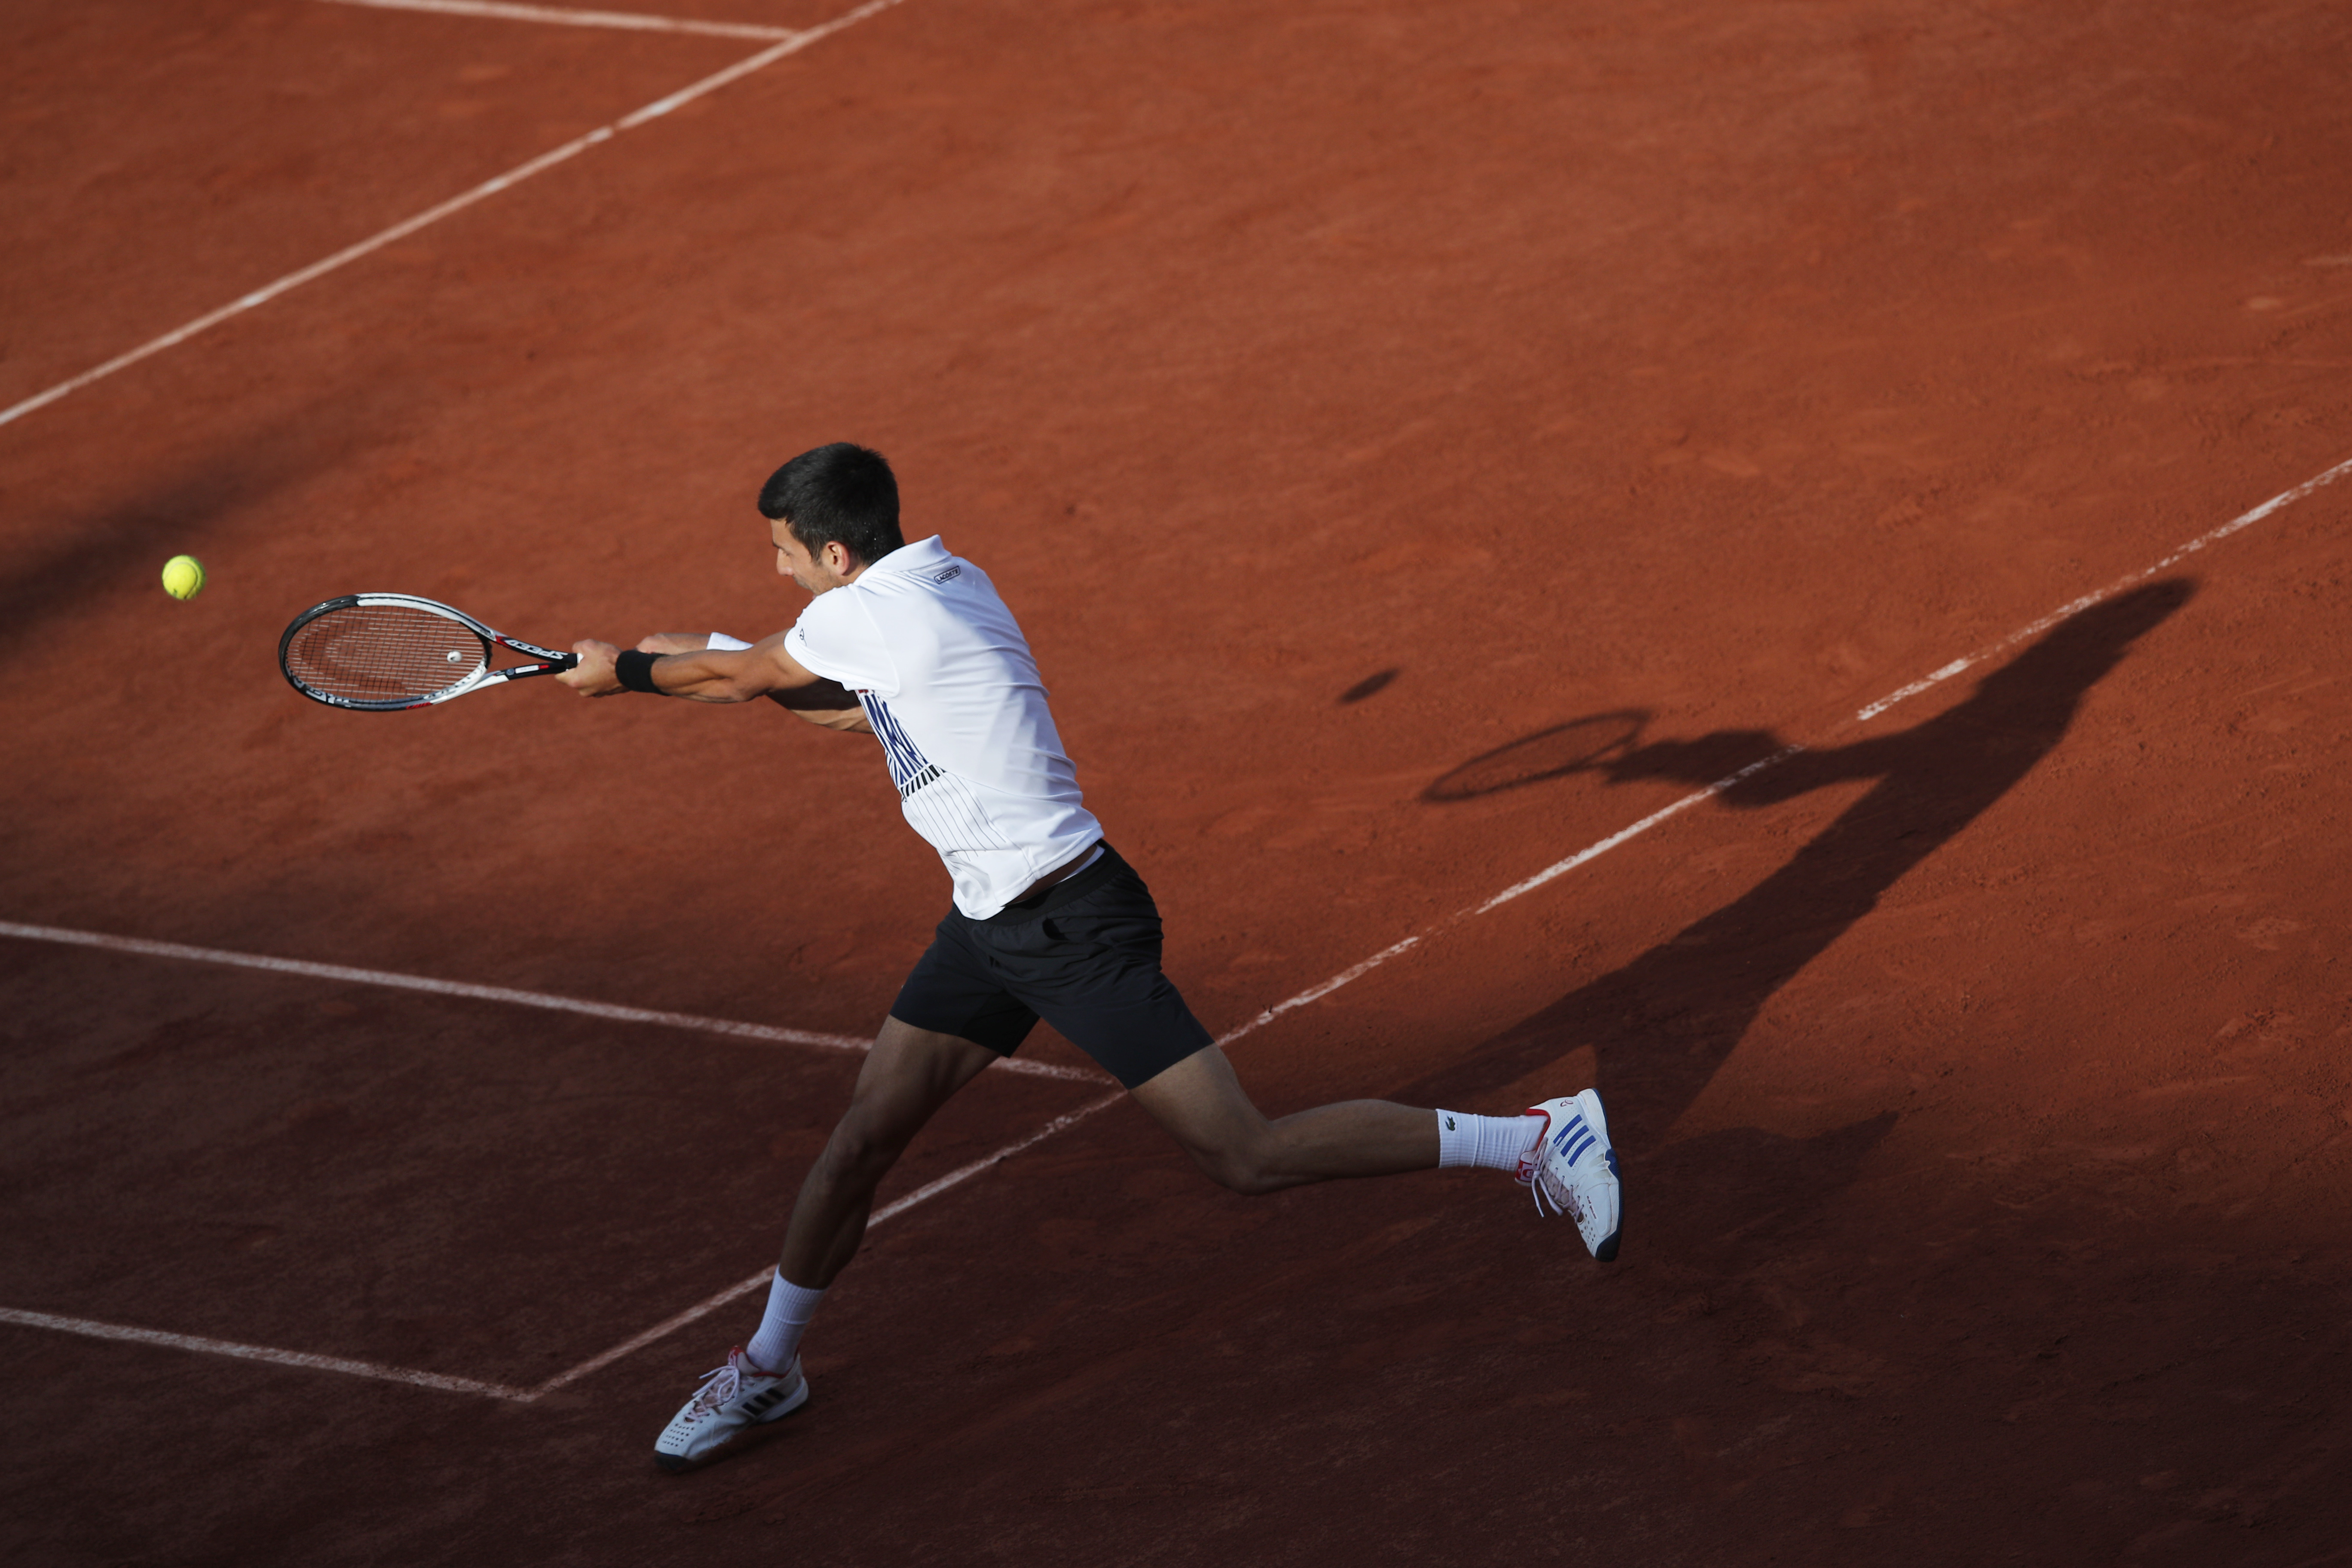 Serbia's Novak Djokovic plays a shot against Spain's Albert Ramos-Vinolas in their fourth round match of the French Open tennis tournament at the Roland Garros stadium, in Paris, France. Sunday, June 4, 2017. (AP Photo/Christophe Ena)